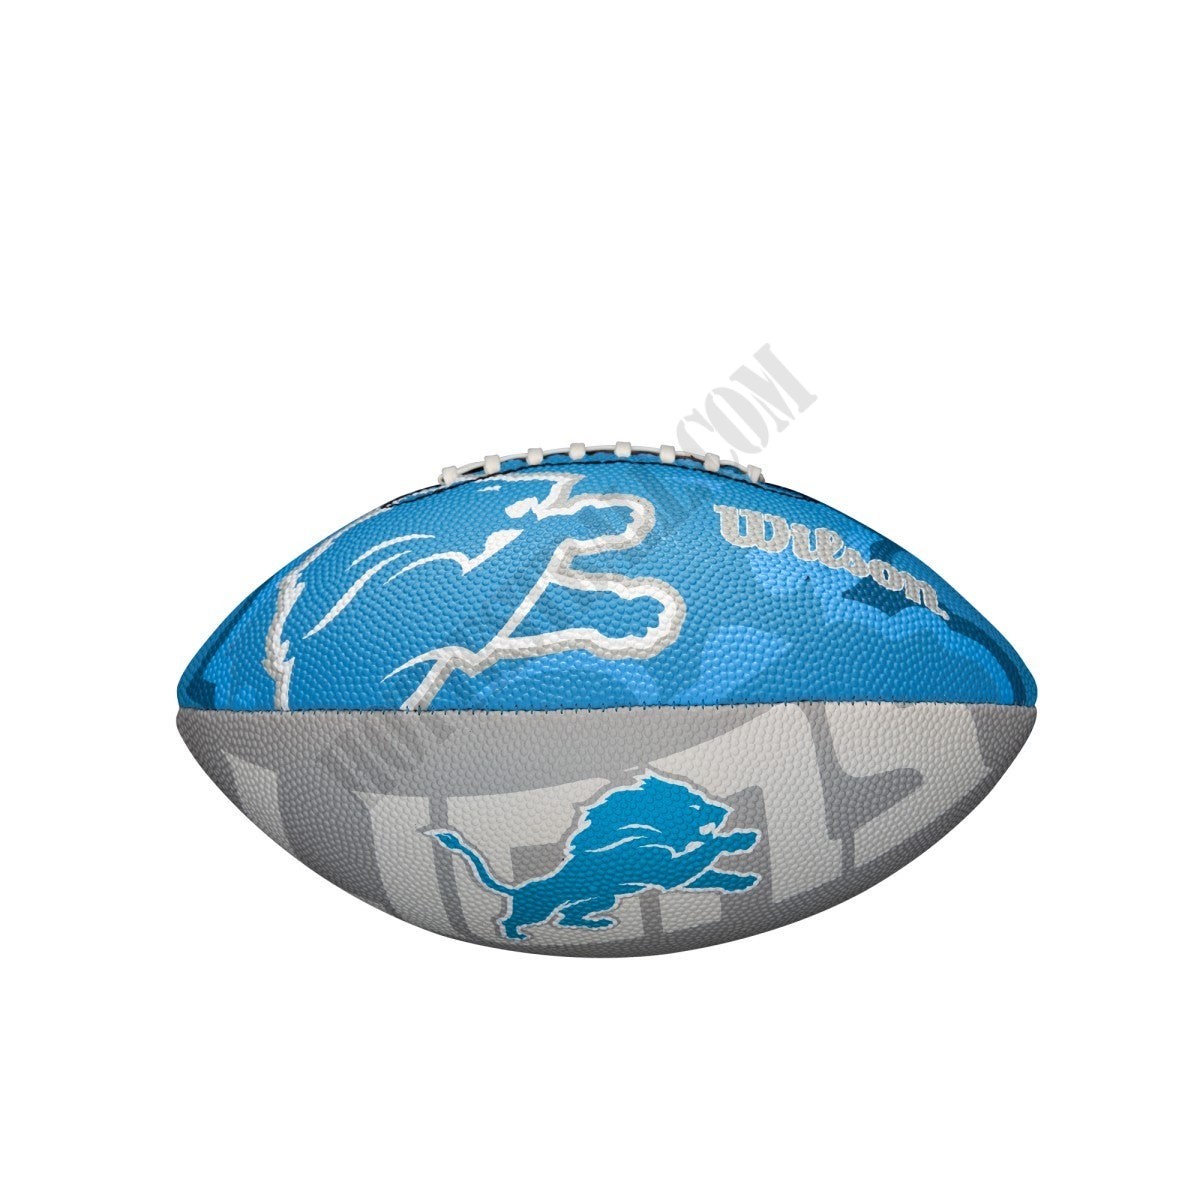 NFL Team Tailgate Football - Detroit Lions ● Wilson Promotions - -2